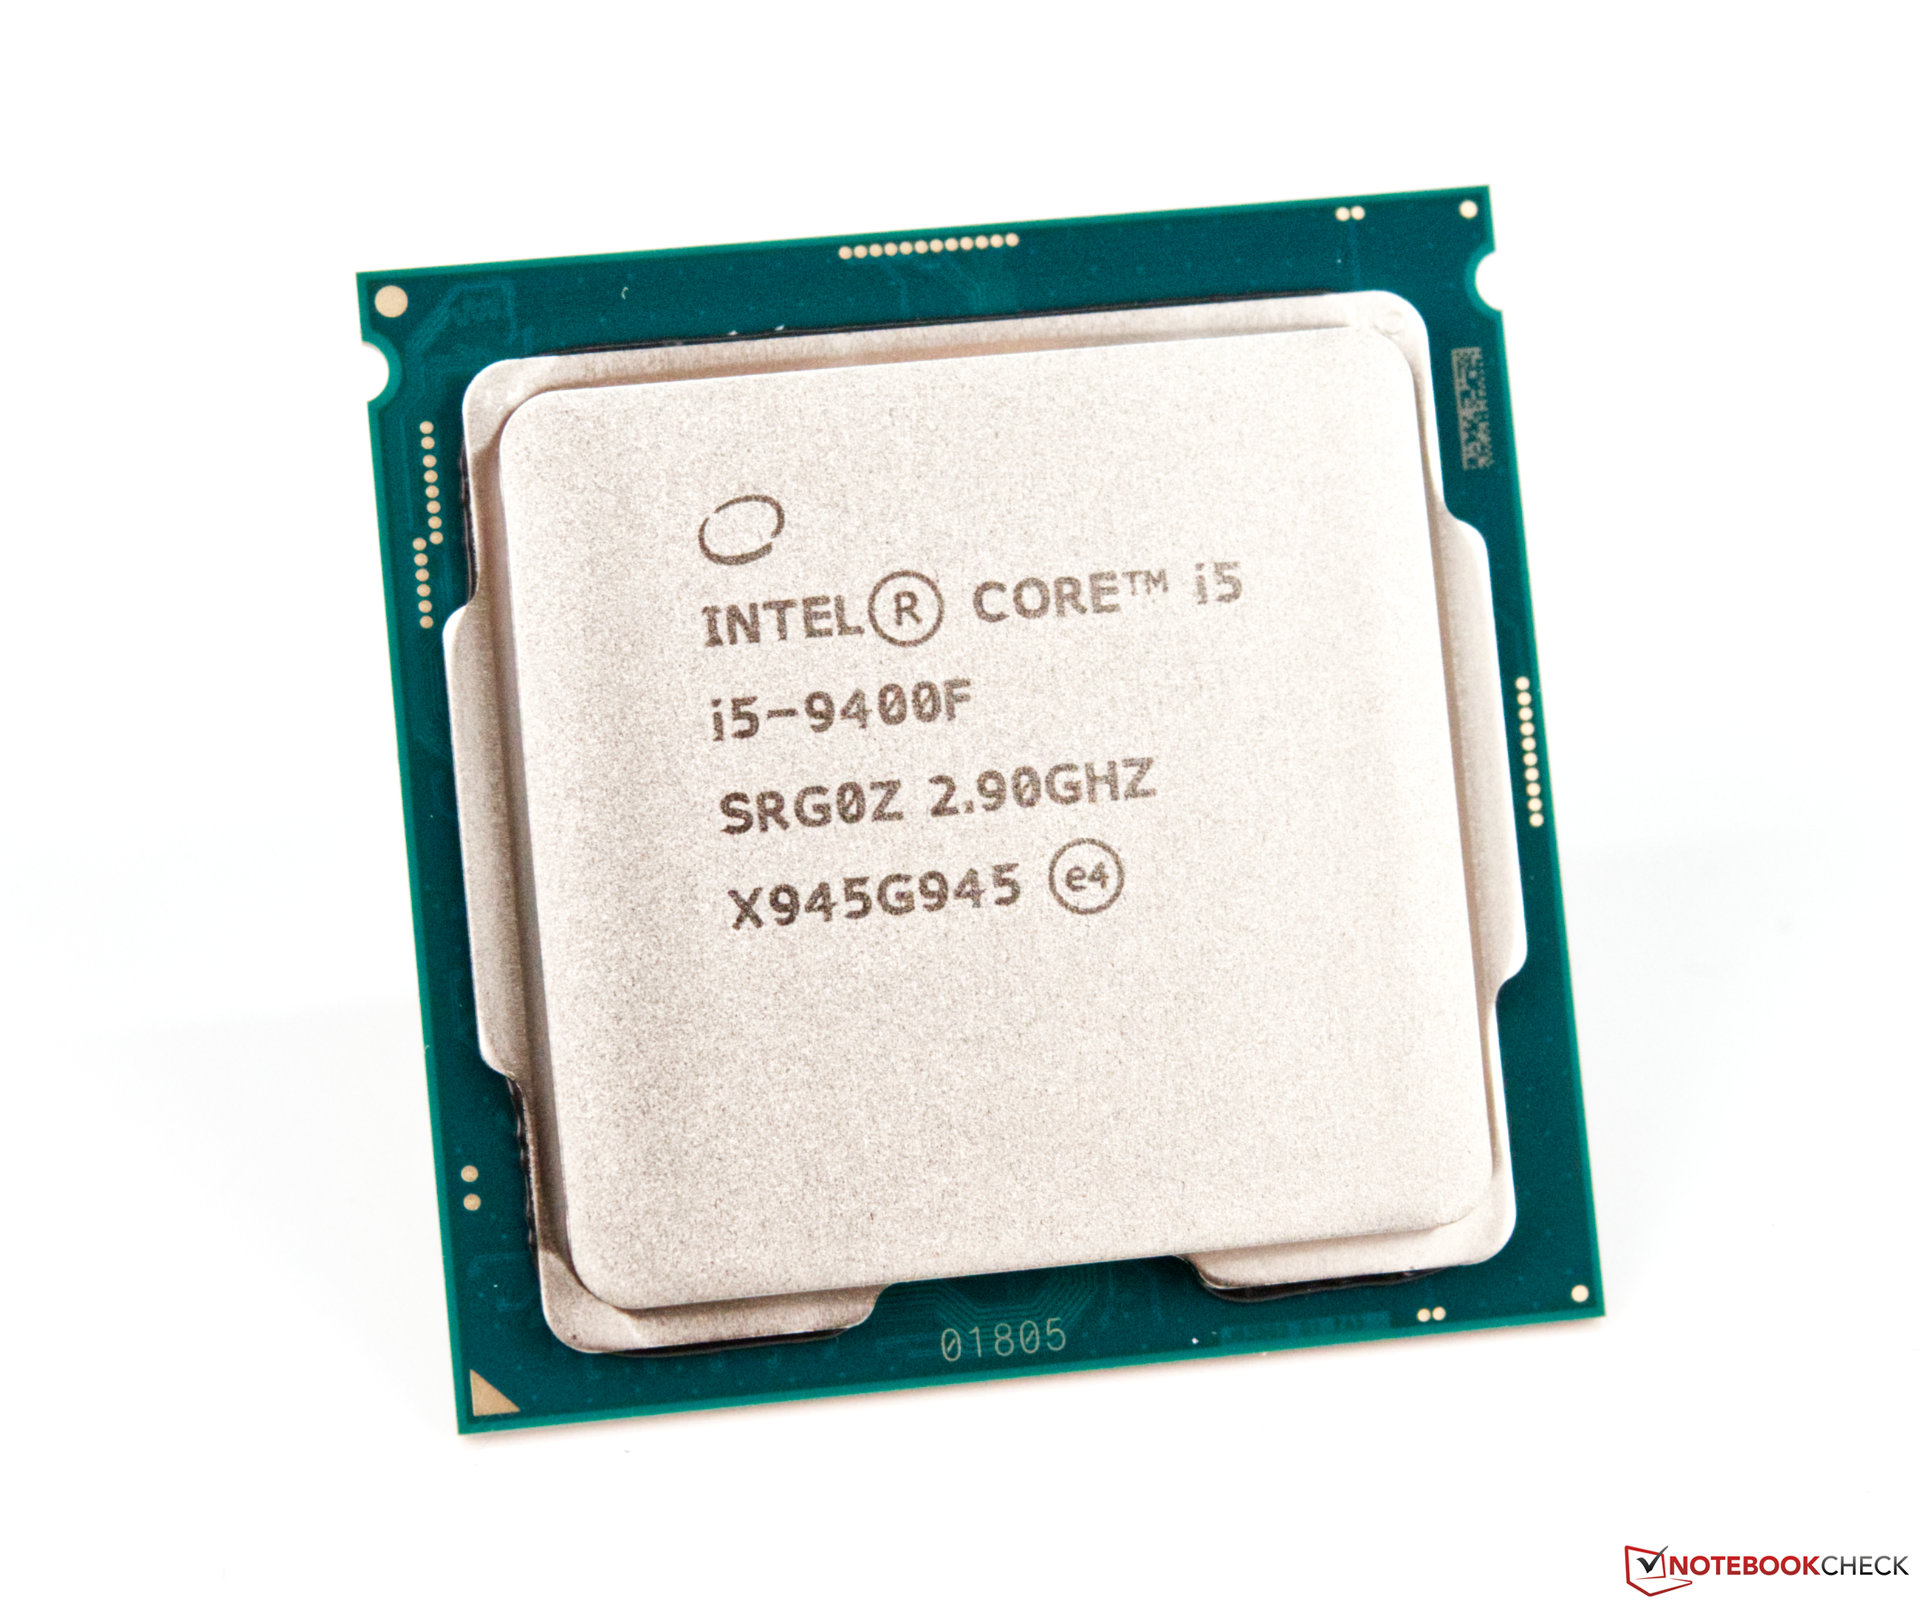 Intel Core i5-9400F Processor - Benchmarks and Specs 